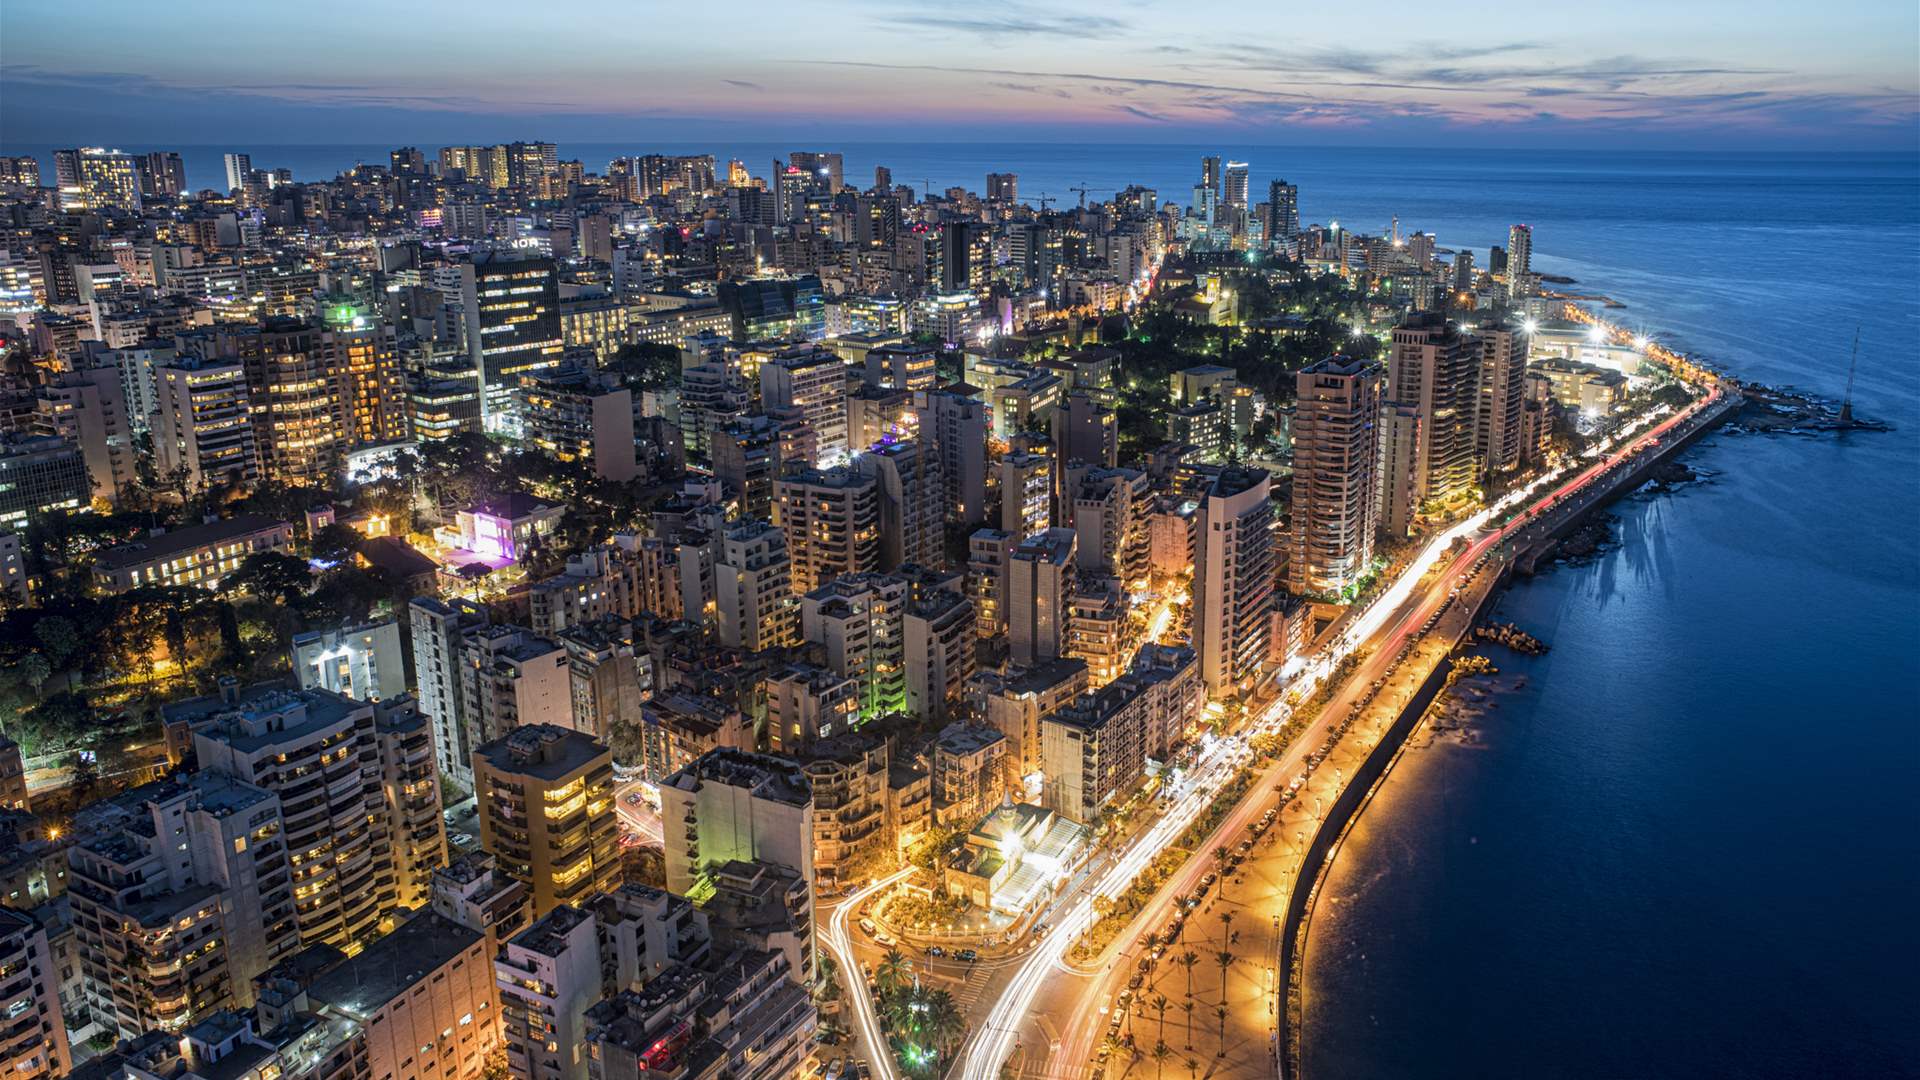 Hotel reservations in Lebanon to reach 80 percent for Eid Al-Fitr: Achkar  